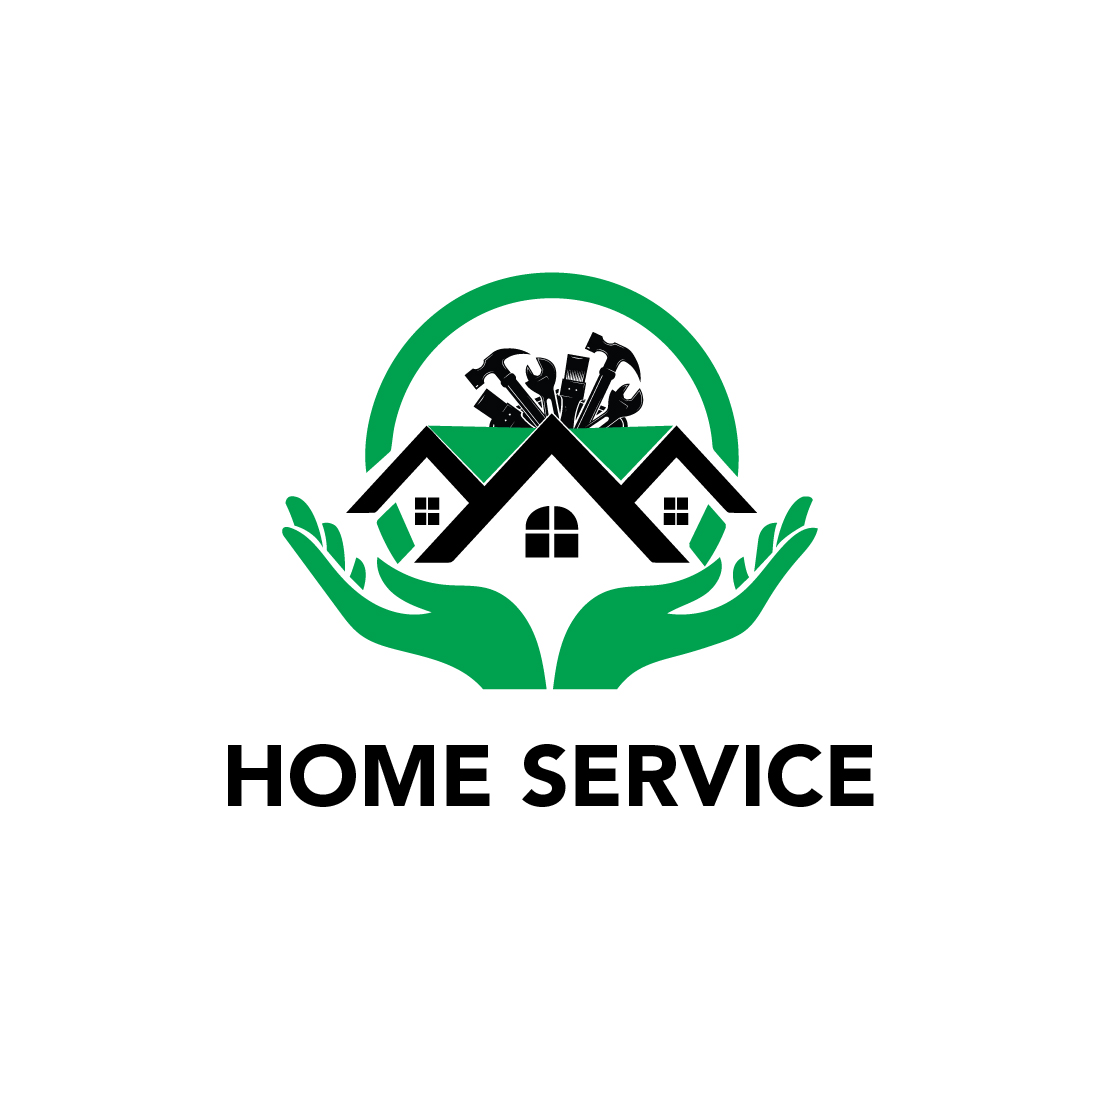 Home service logo preview image.